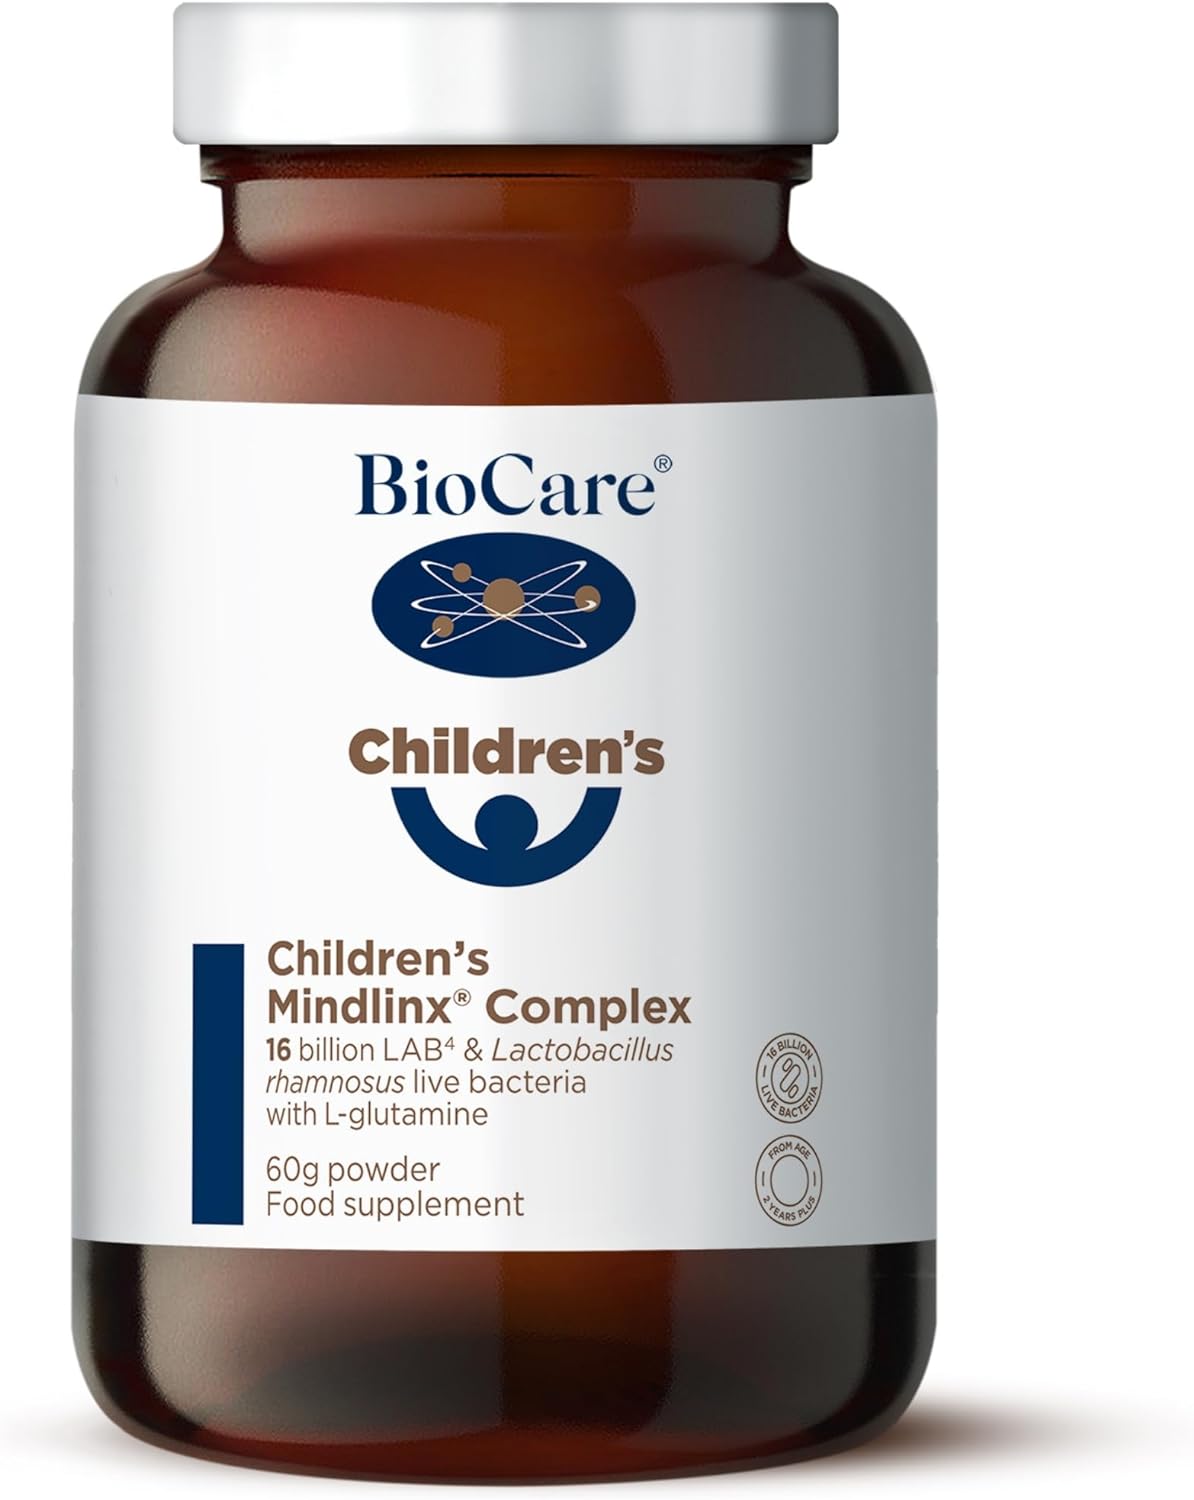 BioCare Children's Mindlinx Complex | 16 Billion LAB4 & Lactobacillus 210 Grams